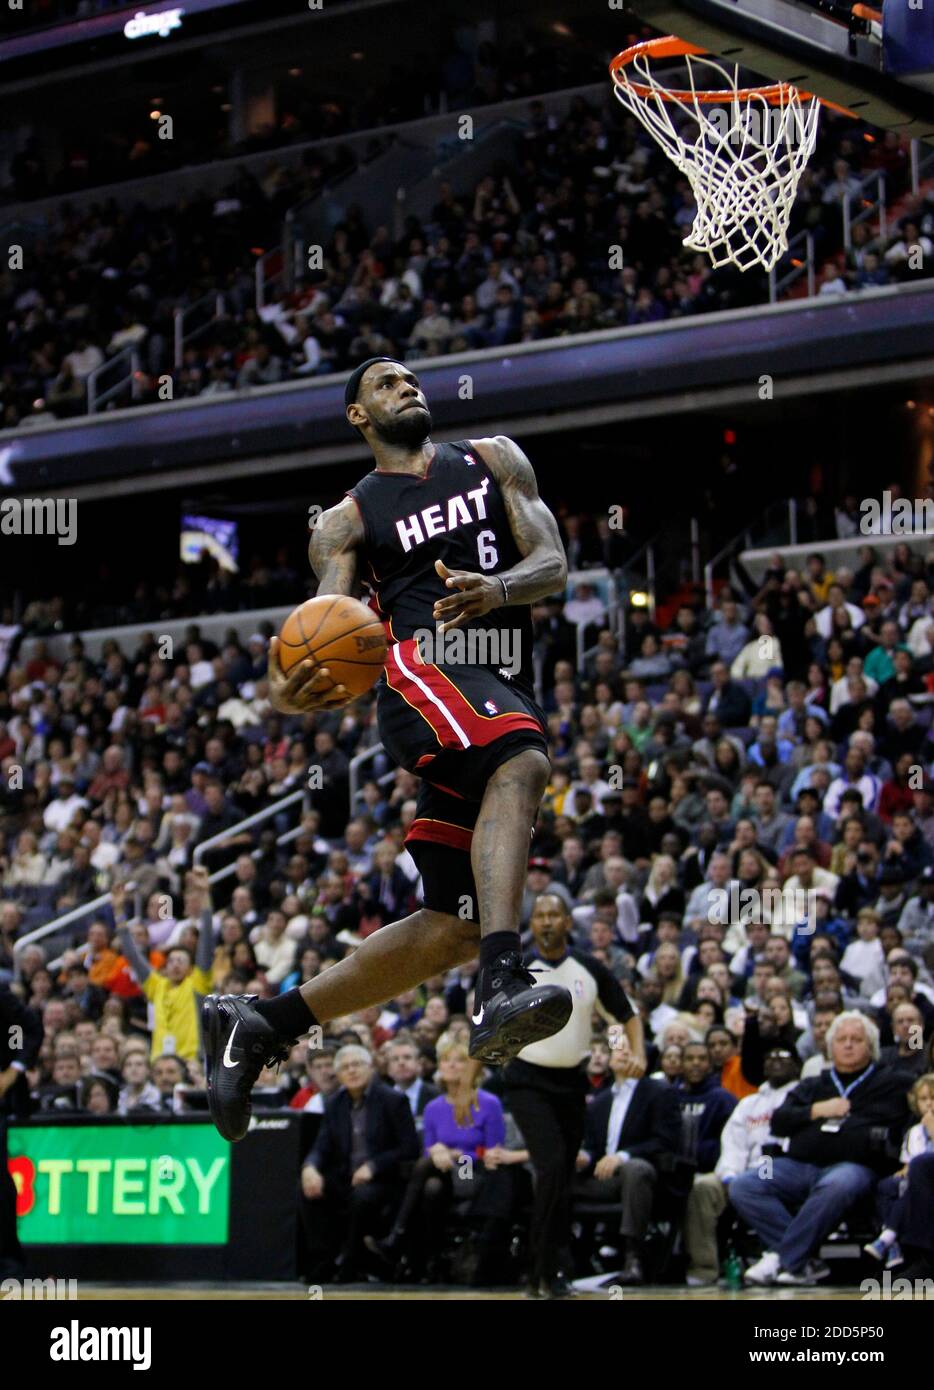 NO FILM, NO VIDEO, NO TV, NO DOCUMENTARY - Miami Heat forward LeBron James  flies to the basket for a windmill dunk during NBA Basketball match,  Washington Wizards vs Miami Heat at